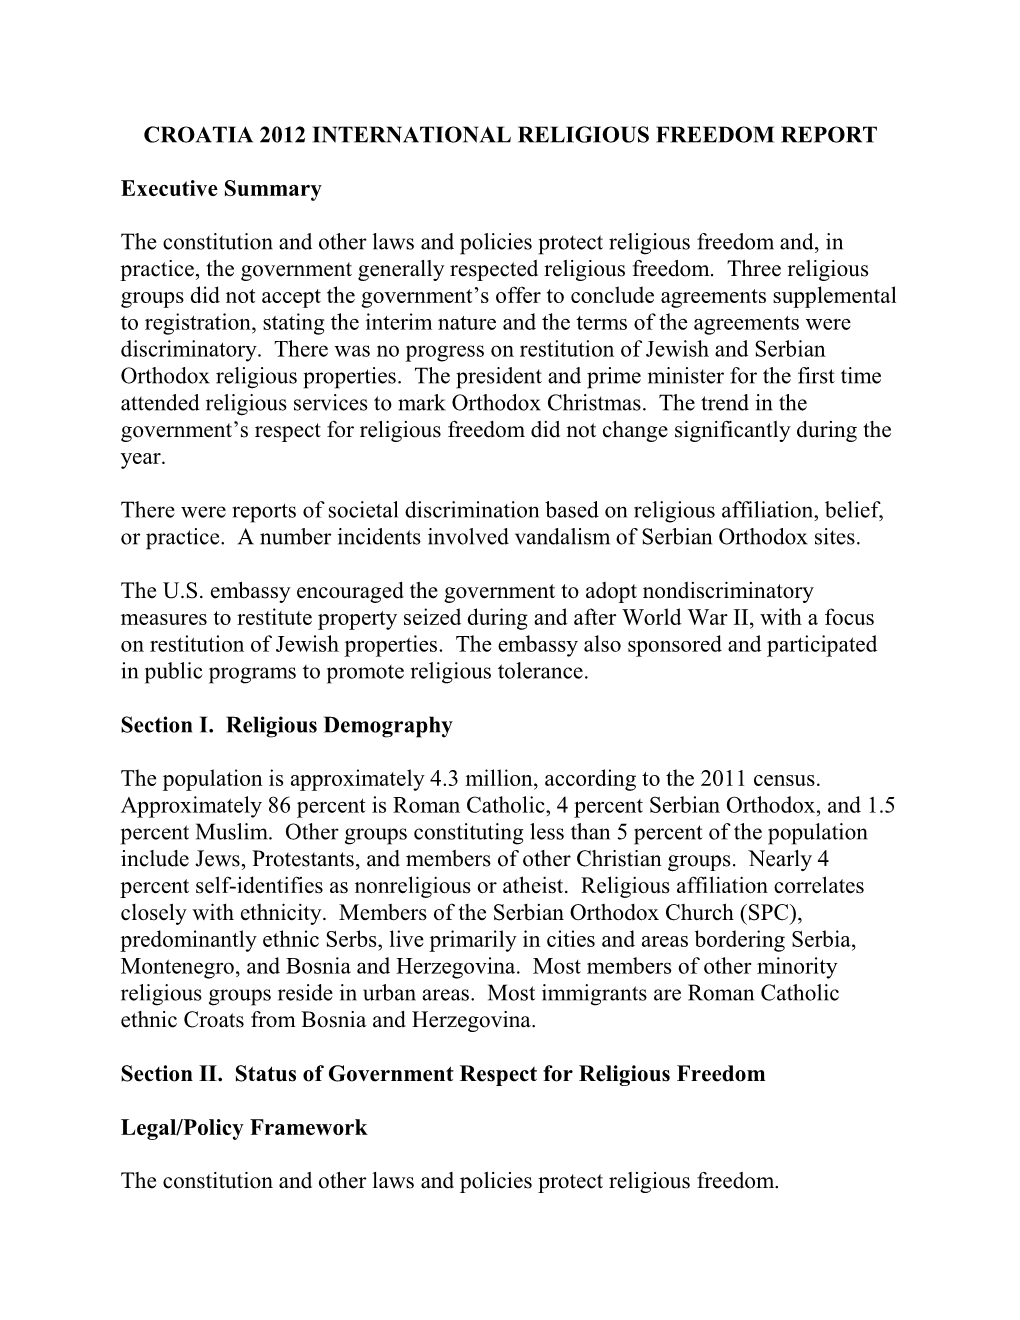 Croatia 2012 International Religious Freedom Report